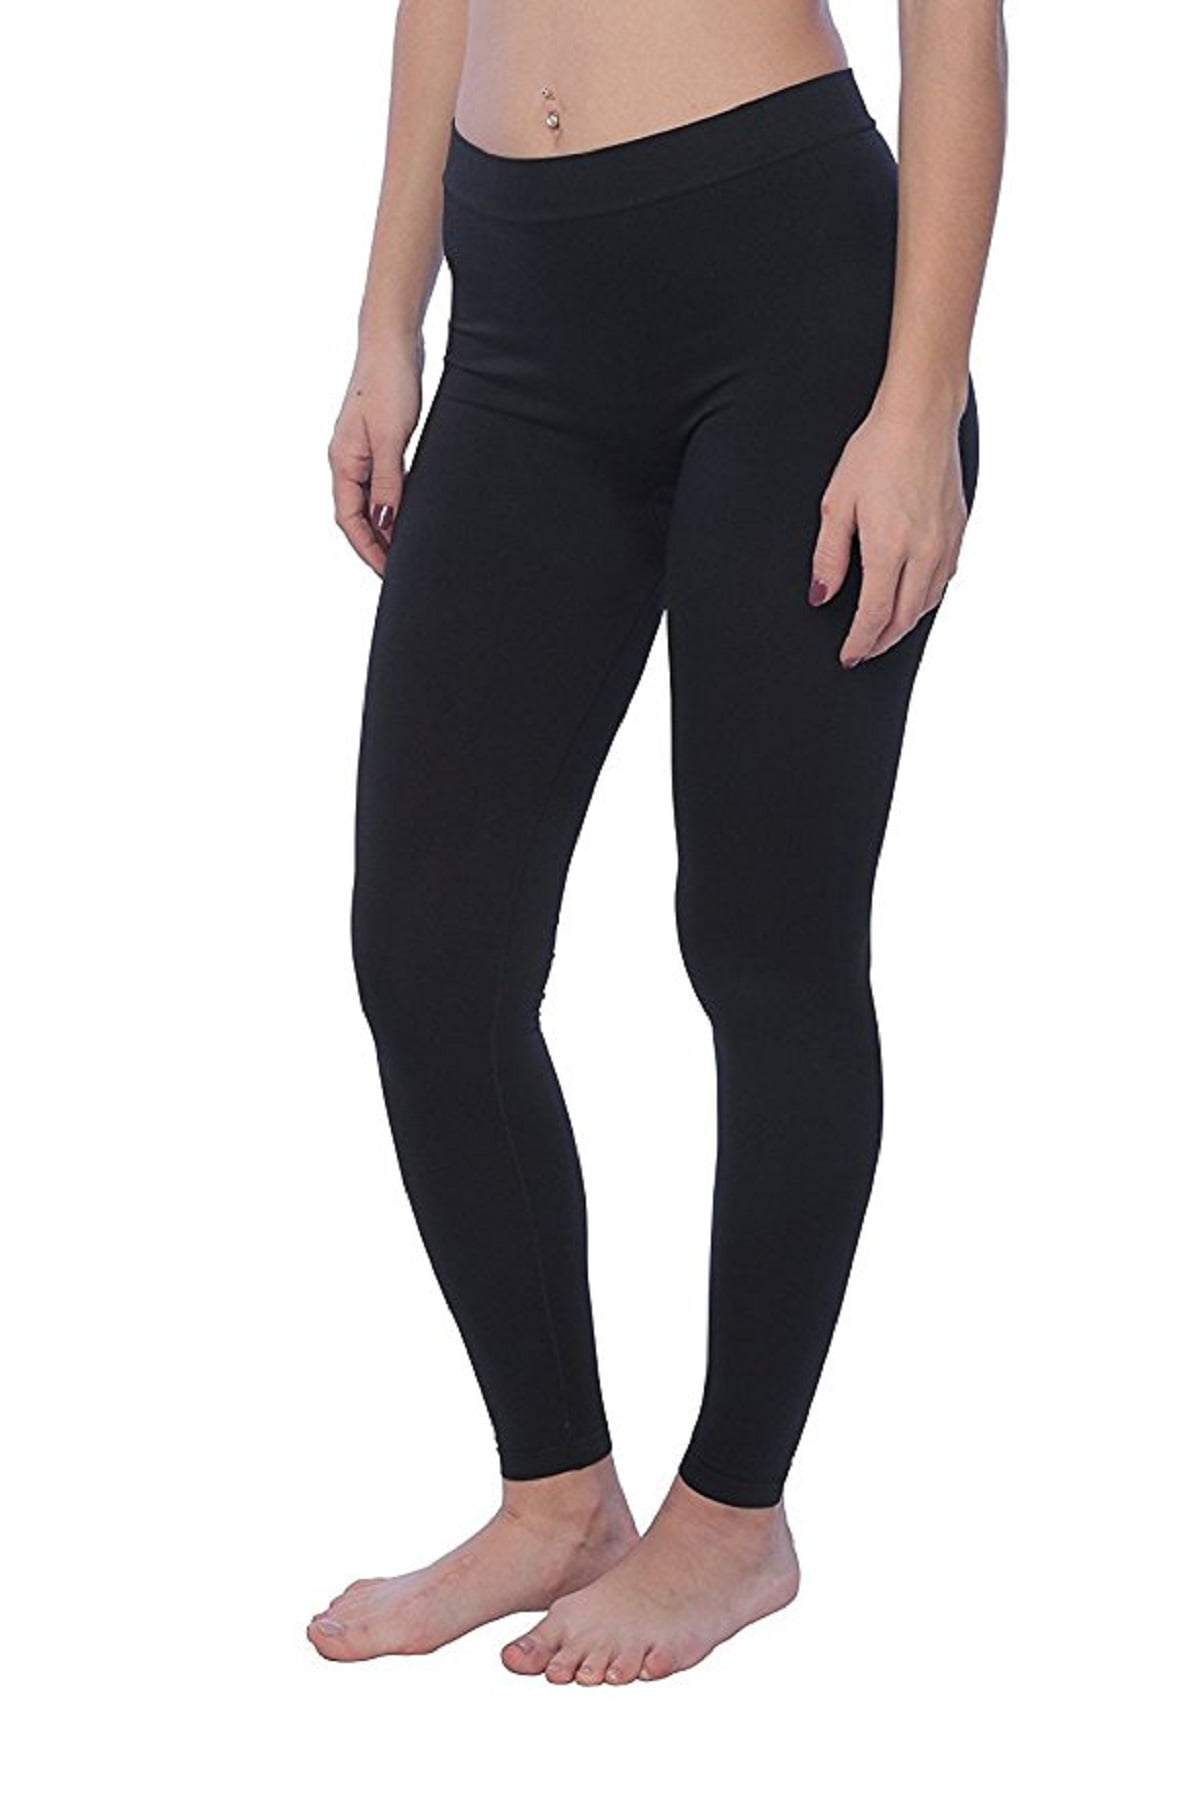 Hanes Women's Curves Comfort Leggings, Black, X-Large-XX-Large